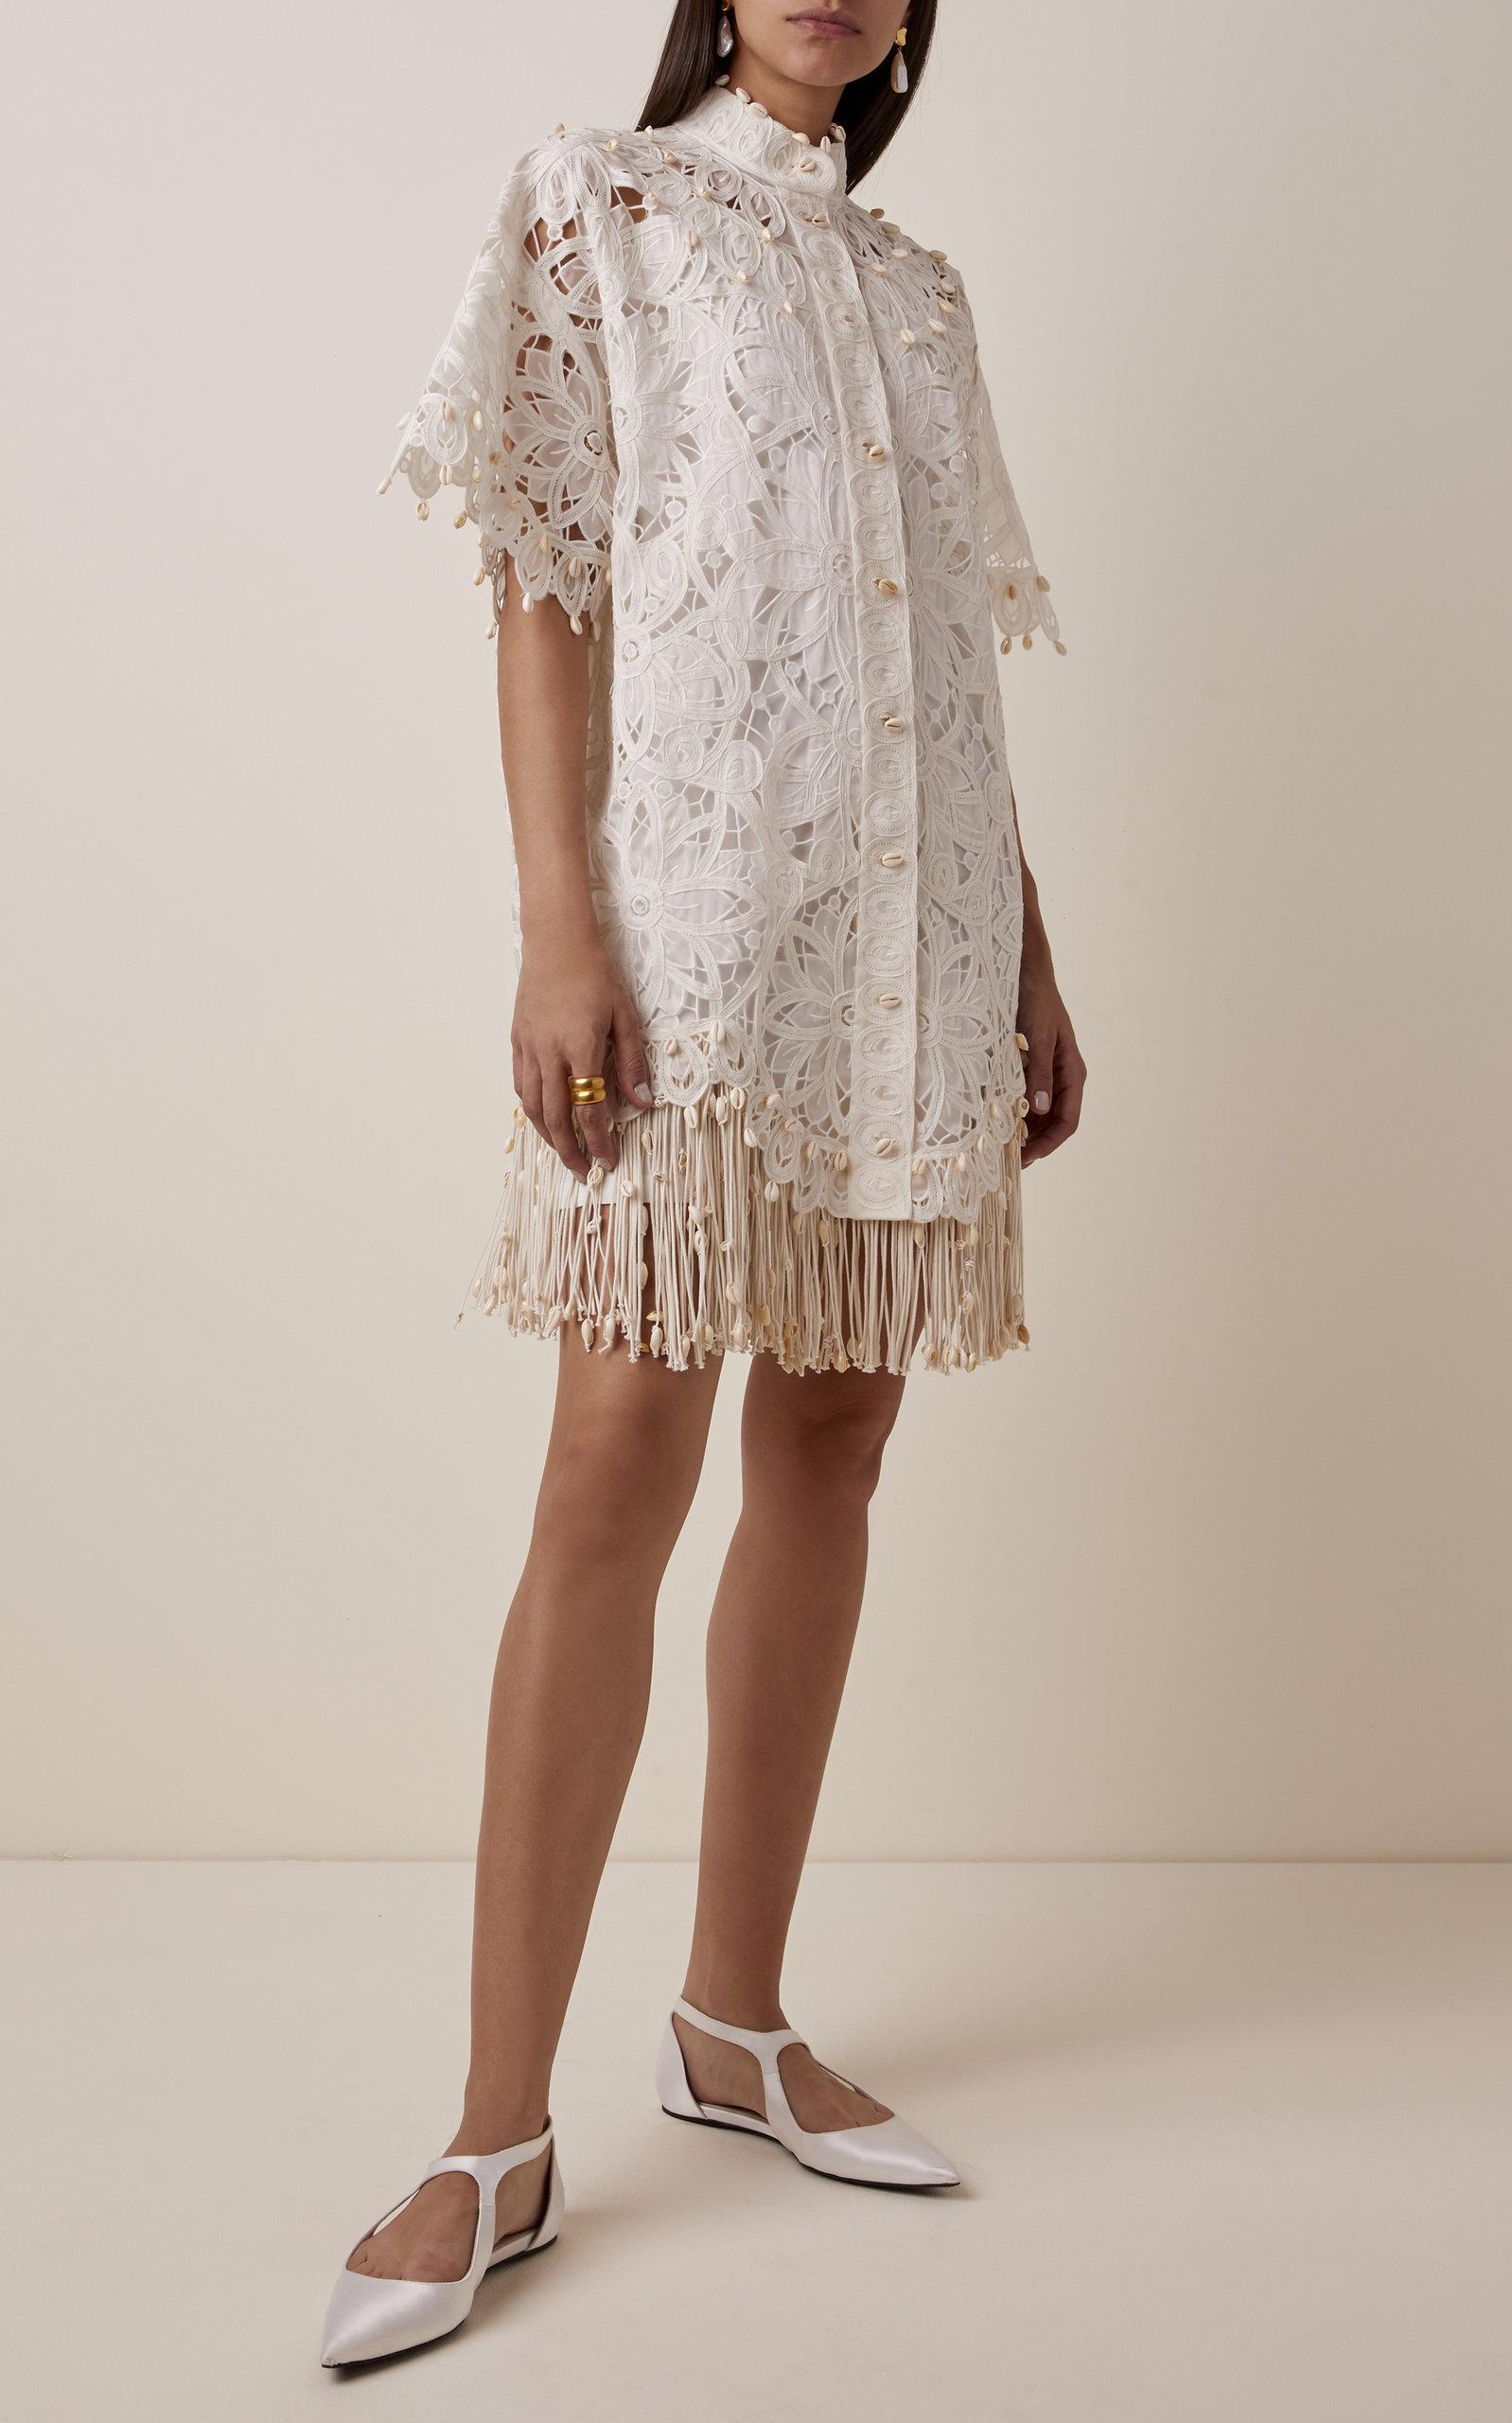 Zimmermann Lace Wavelength Shirt Dress in White - Lyst